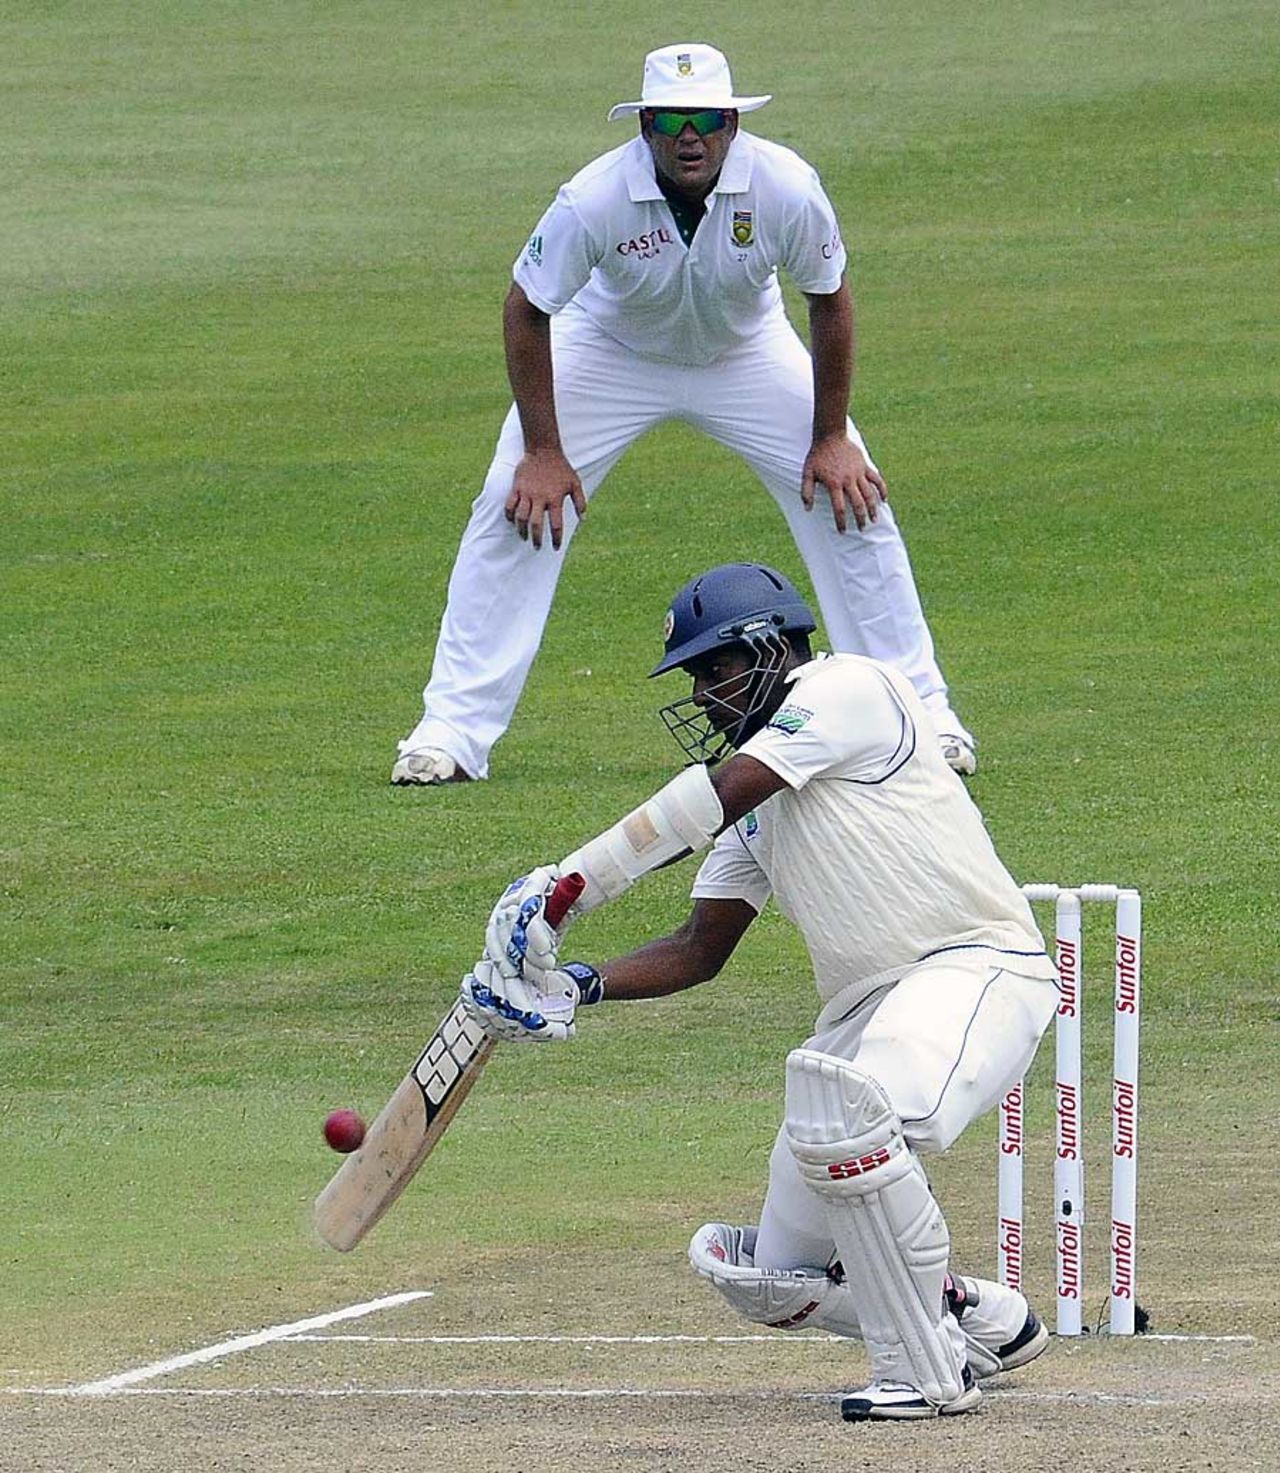 Thilan Samaraweera prepares to crack one, South Africa v Sri Lanka, 2nd Test, Durban, 3rd day, December 28, 2011